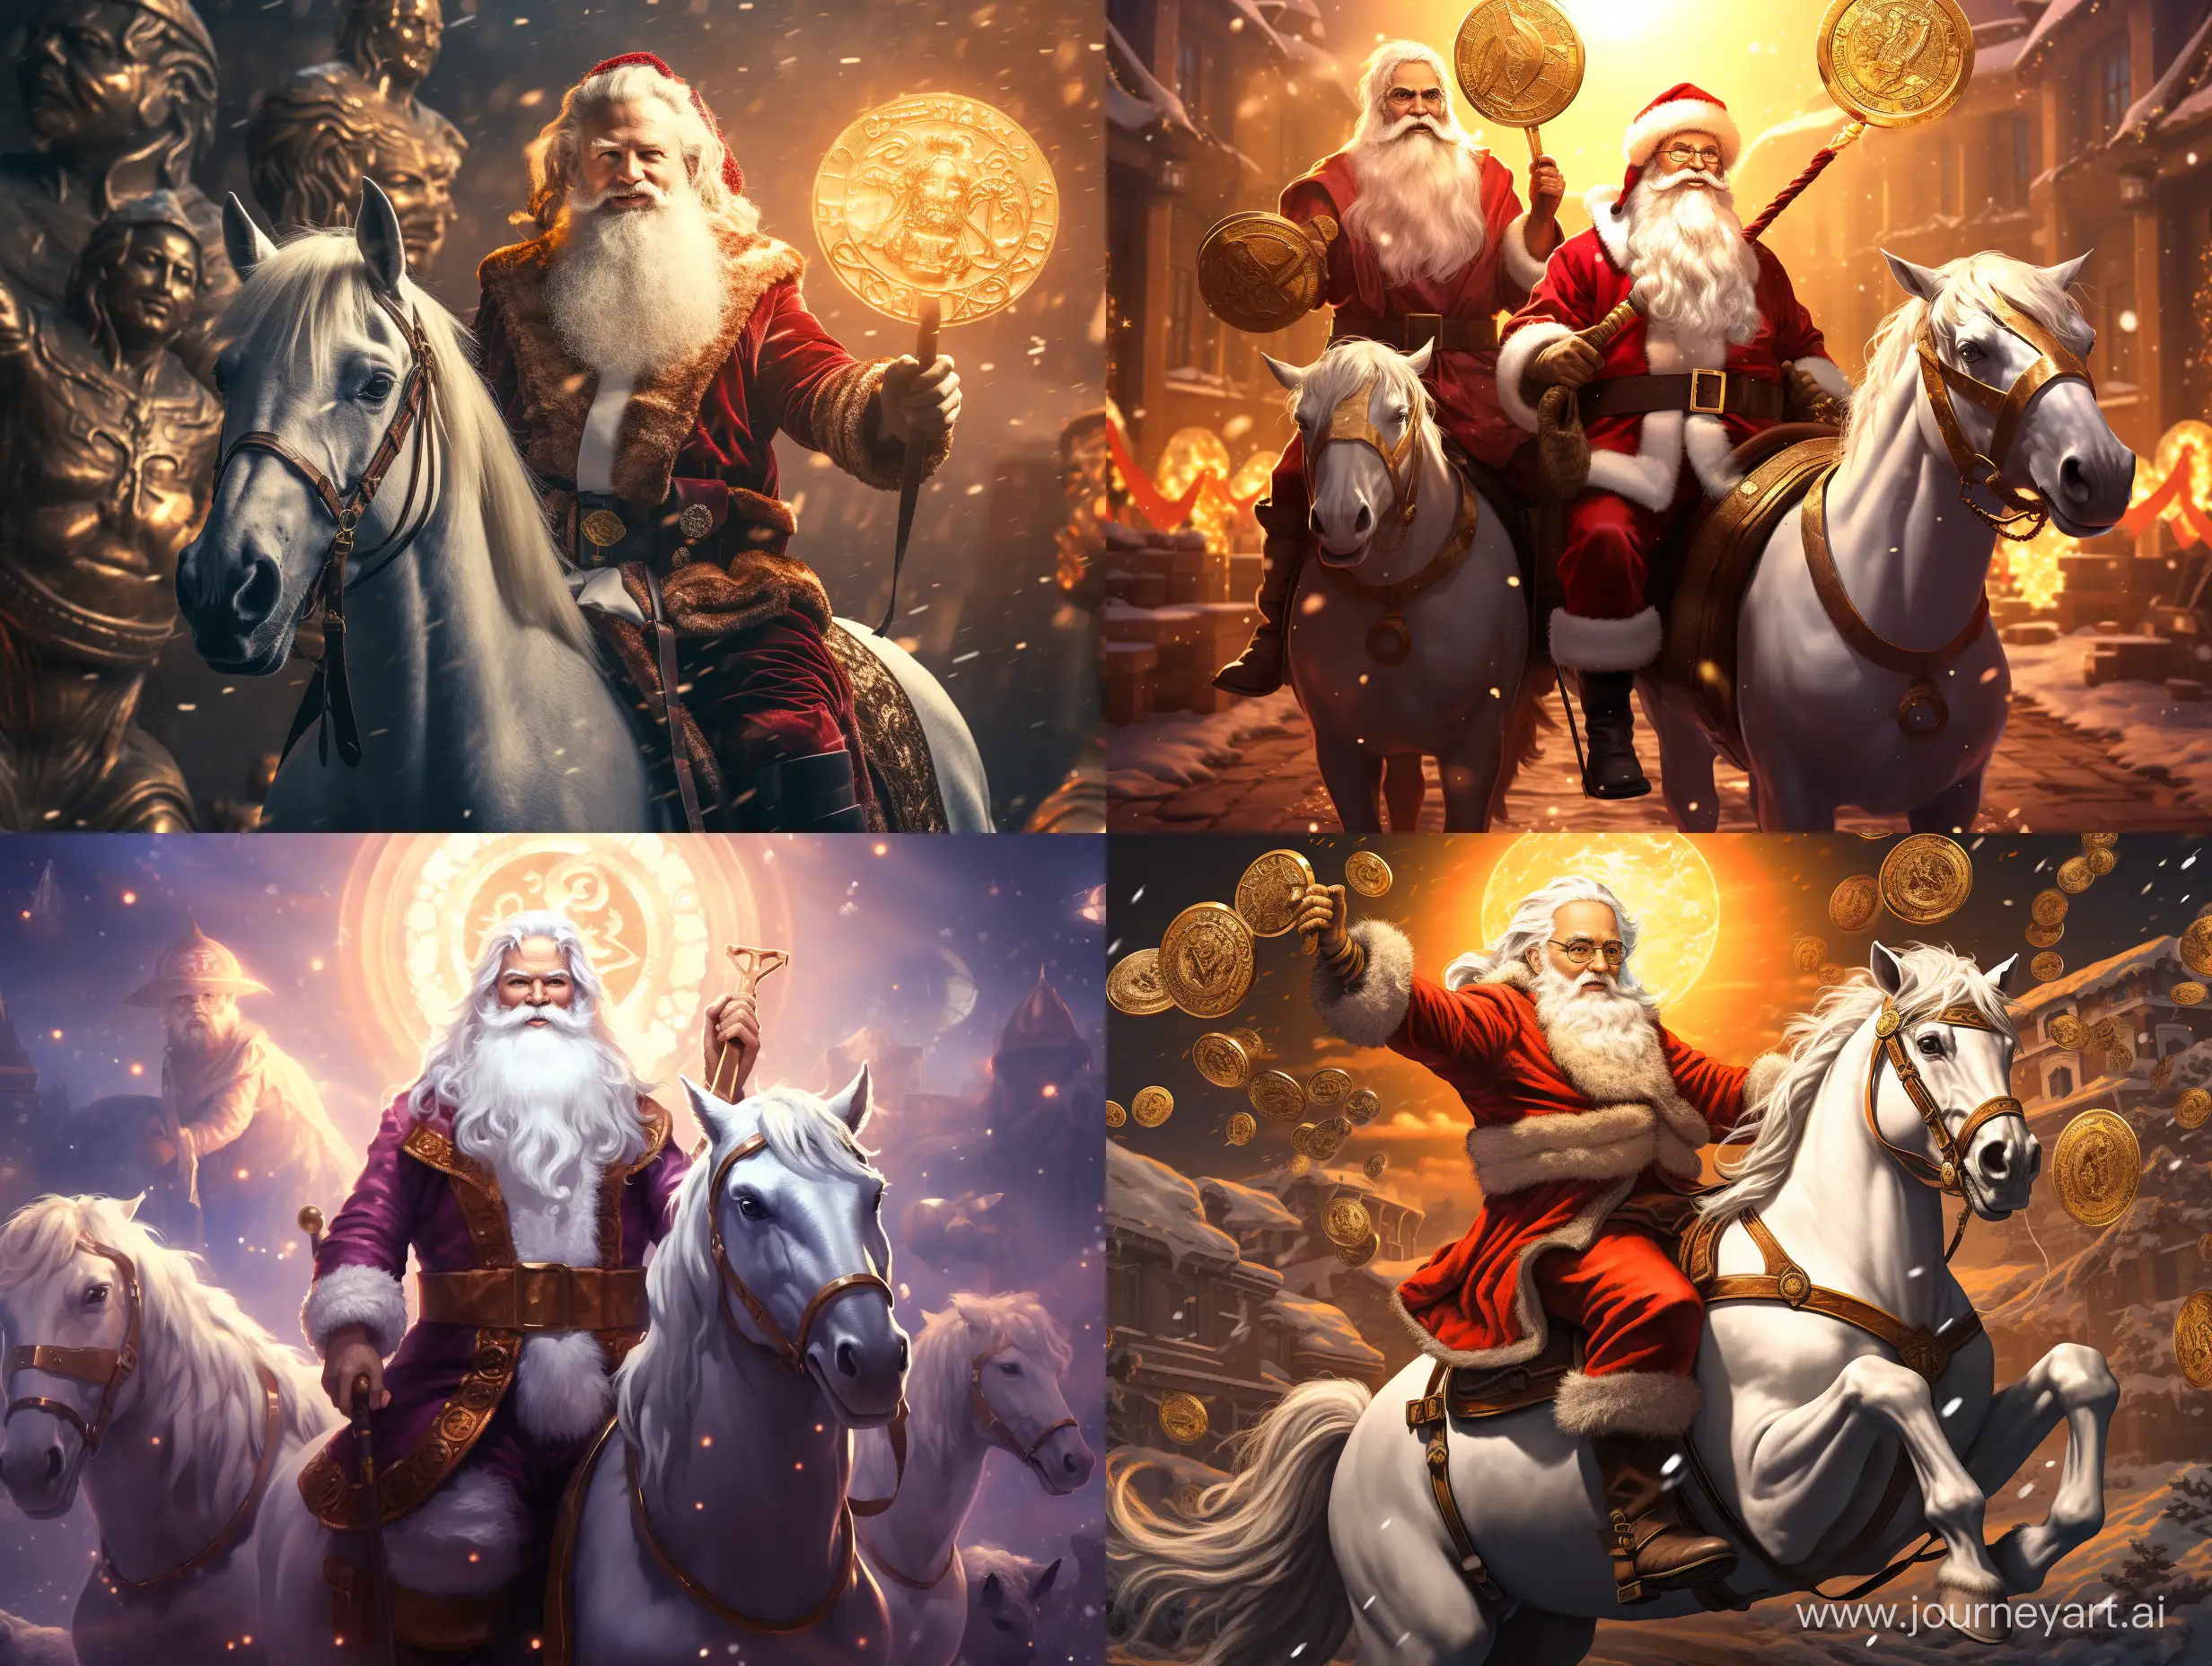 Dynamic-Duo-Fit-30YearOld-Men-Bring-New-Year-Magic-as-Santa-Claus